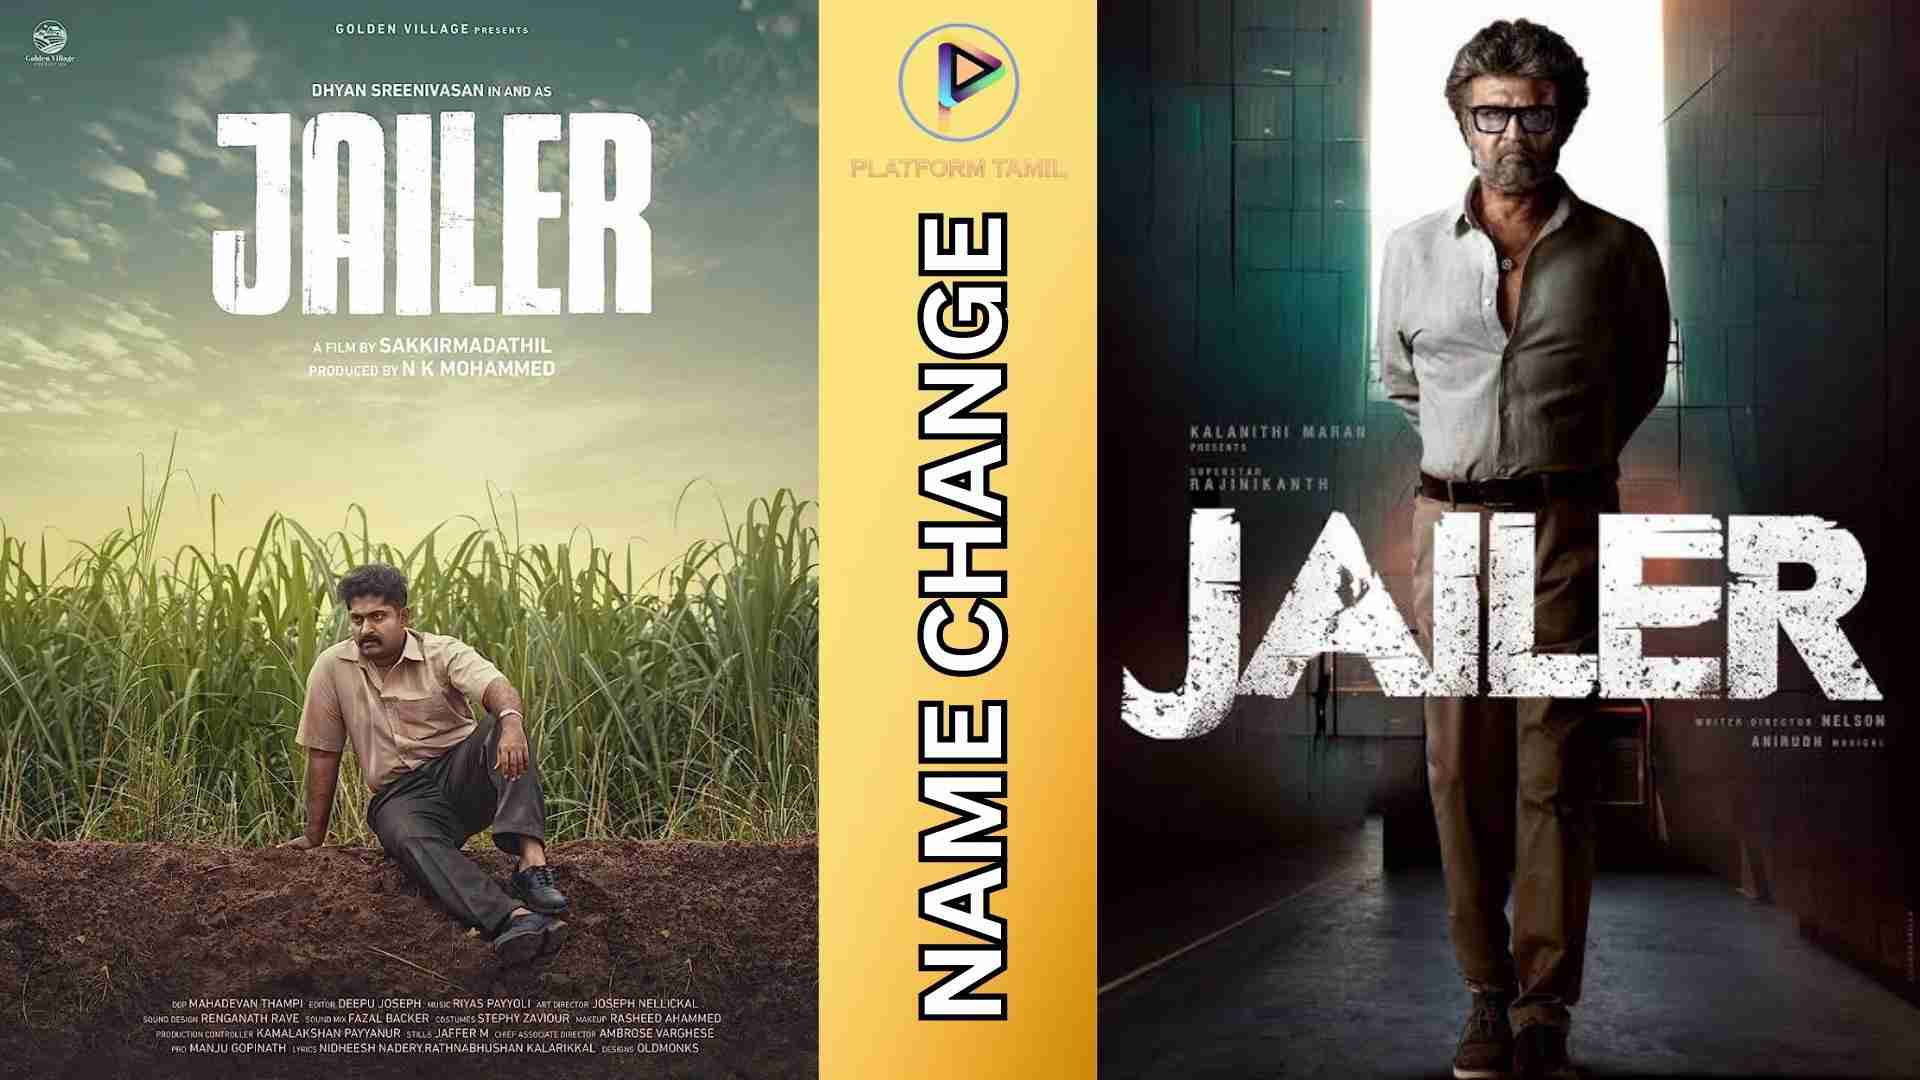 Jailer Title Issue - Platform Tamil